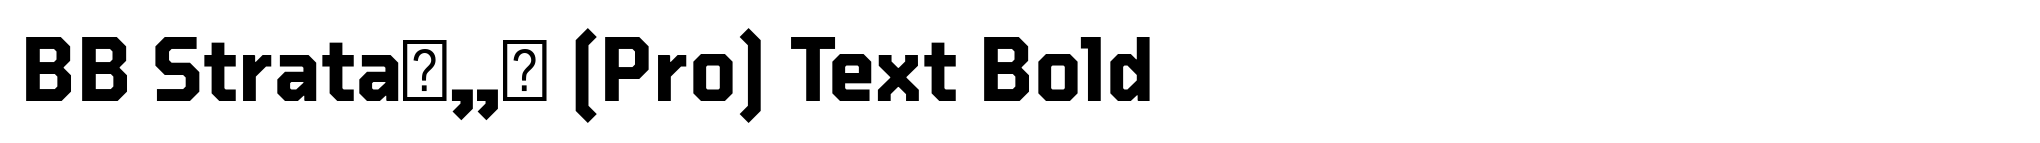 BB Strataв„ў (Pro) Text Bold image